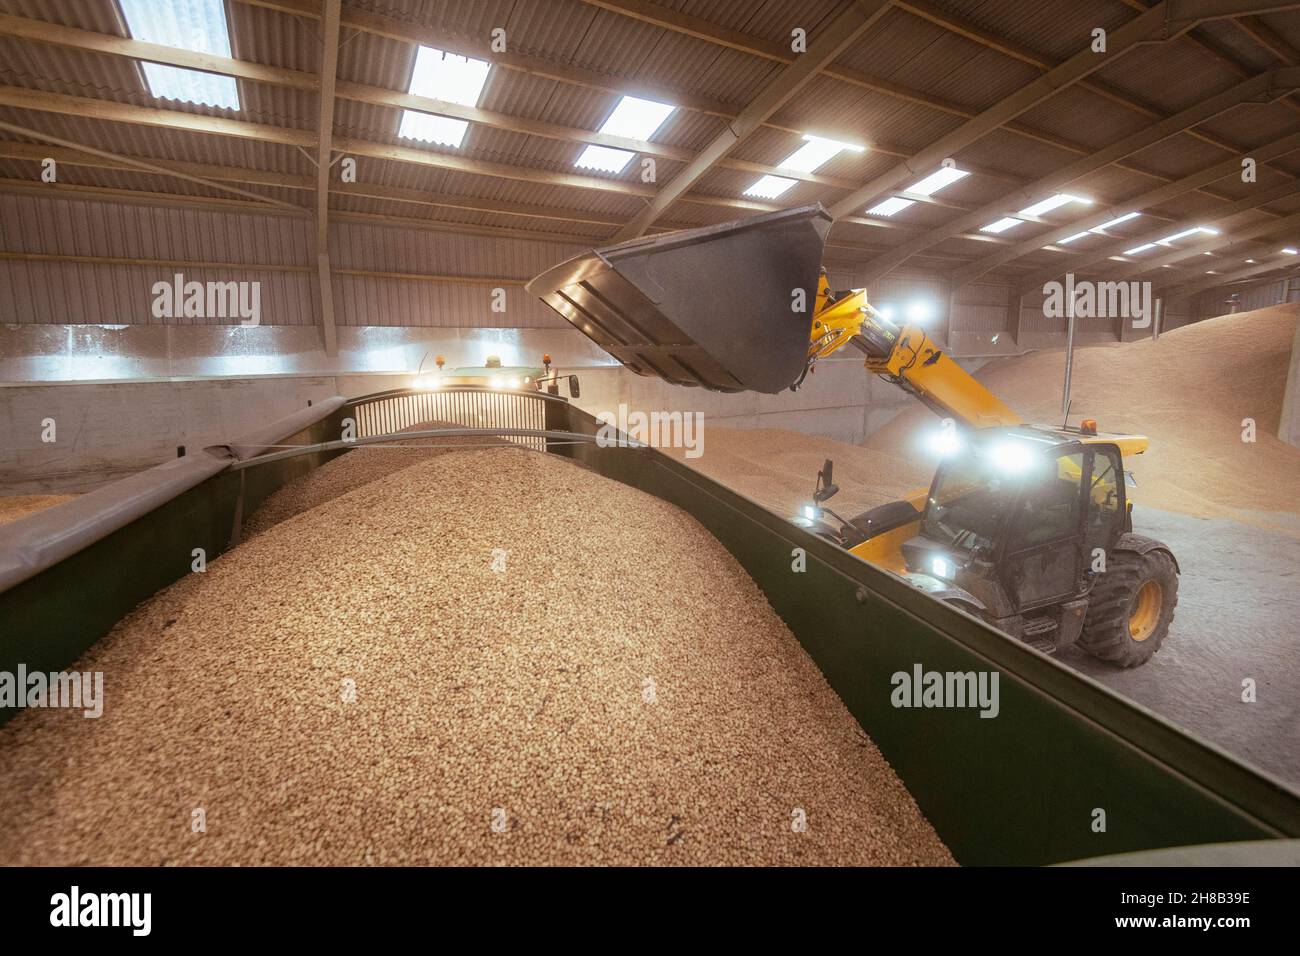 Earth mover pouring grain into trailer in barn Stock Photo